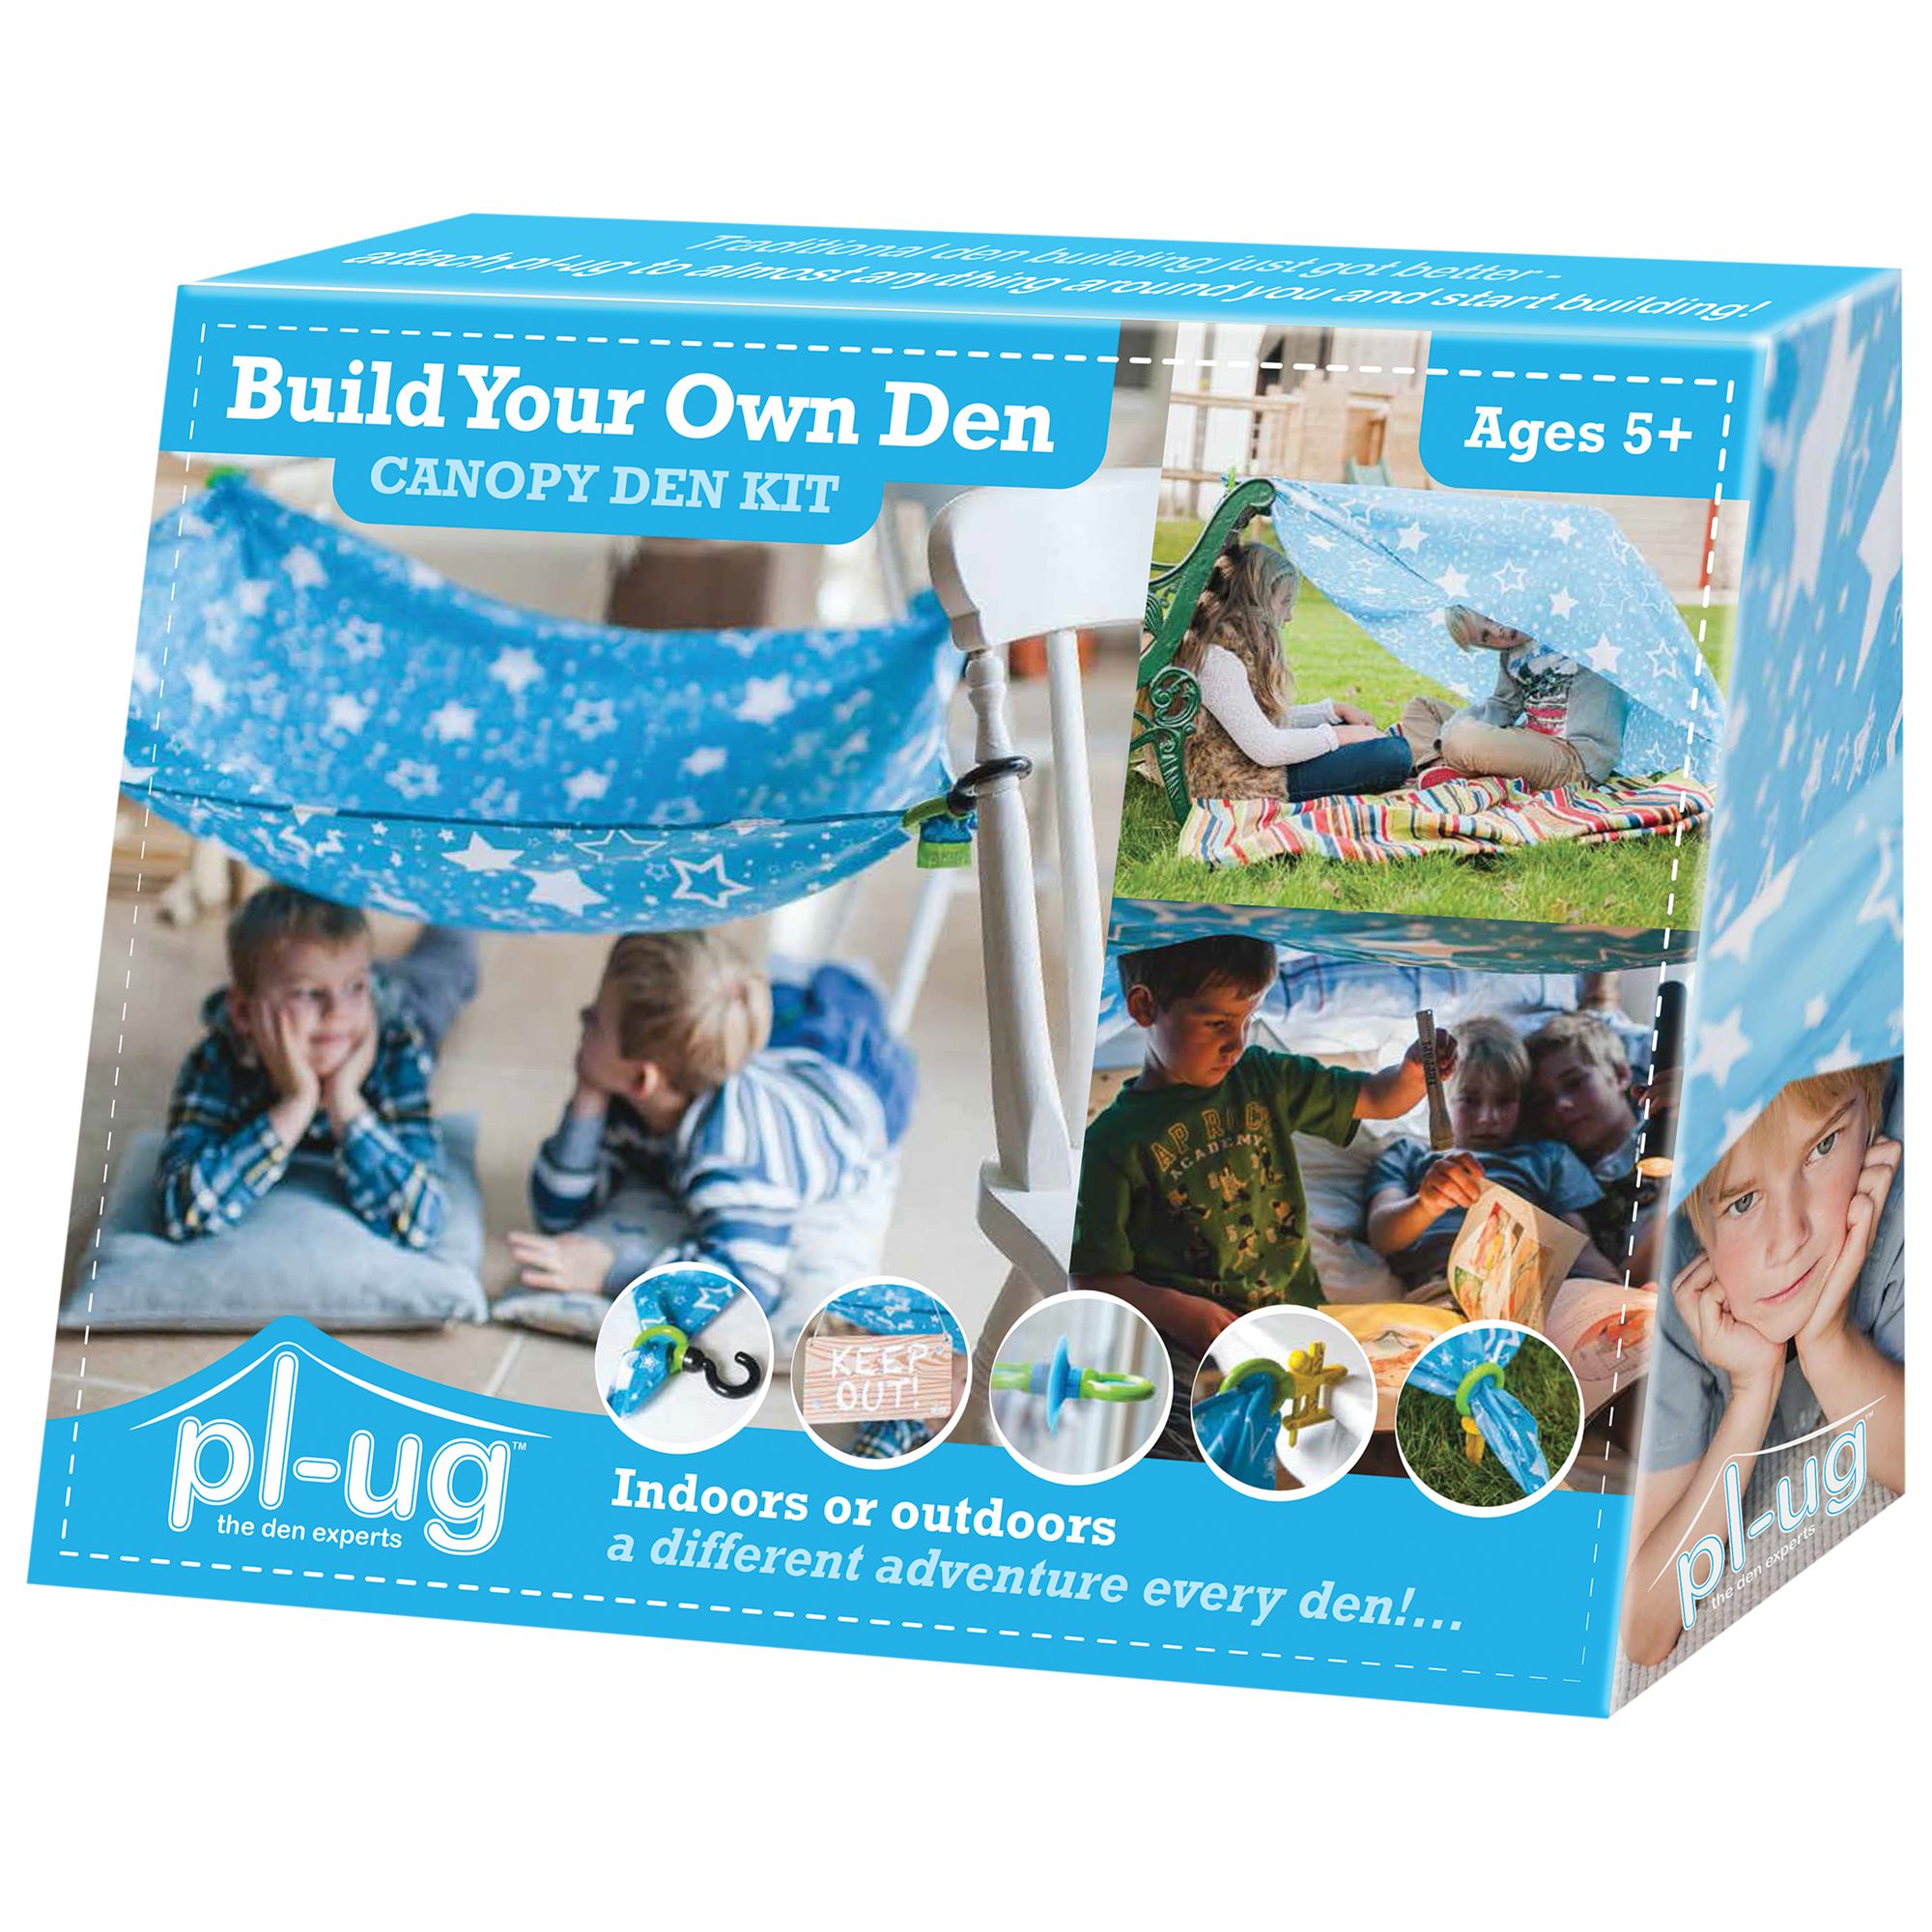 Build Your Own Den